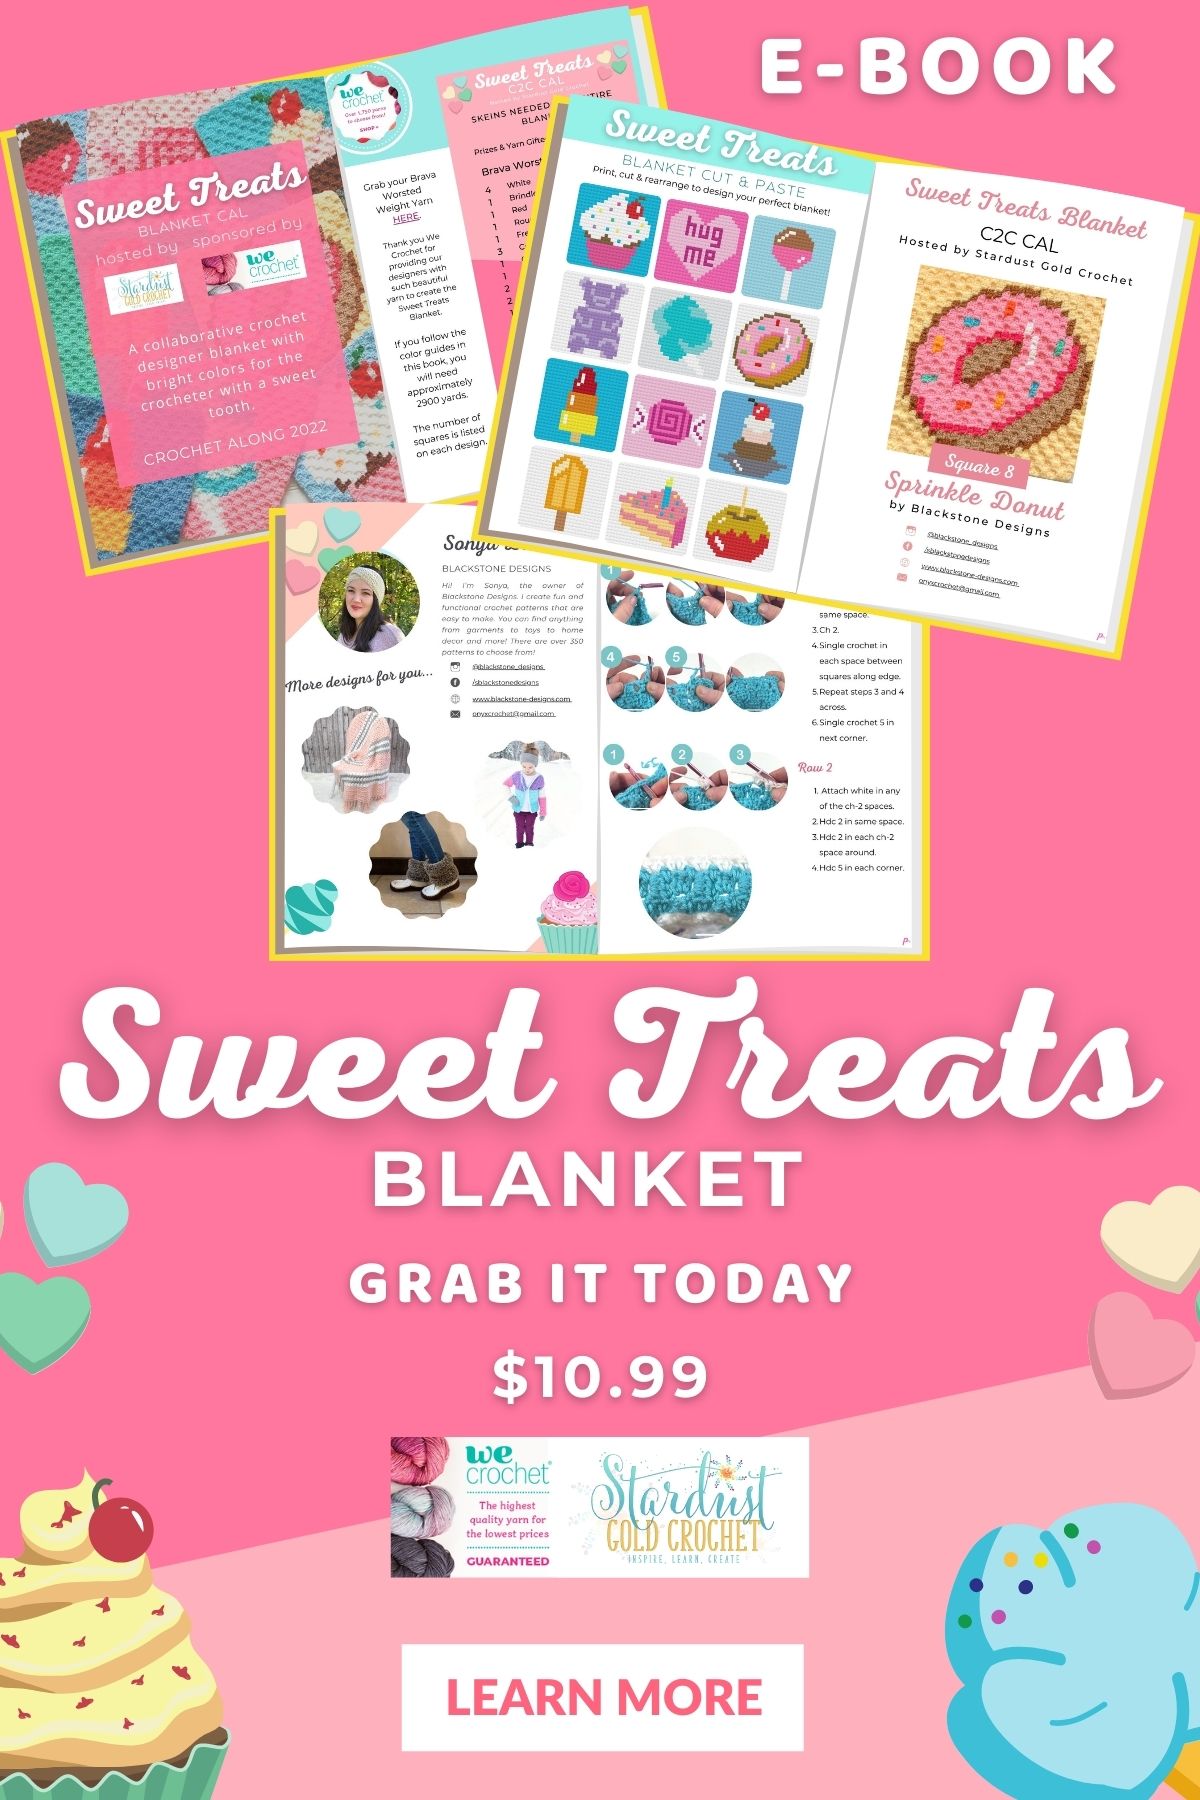 Sweet treats blog hop